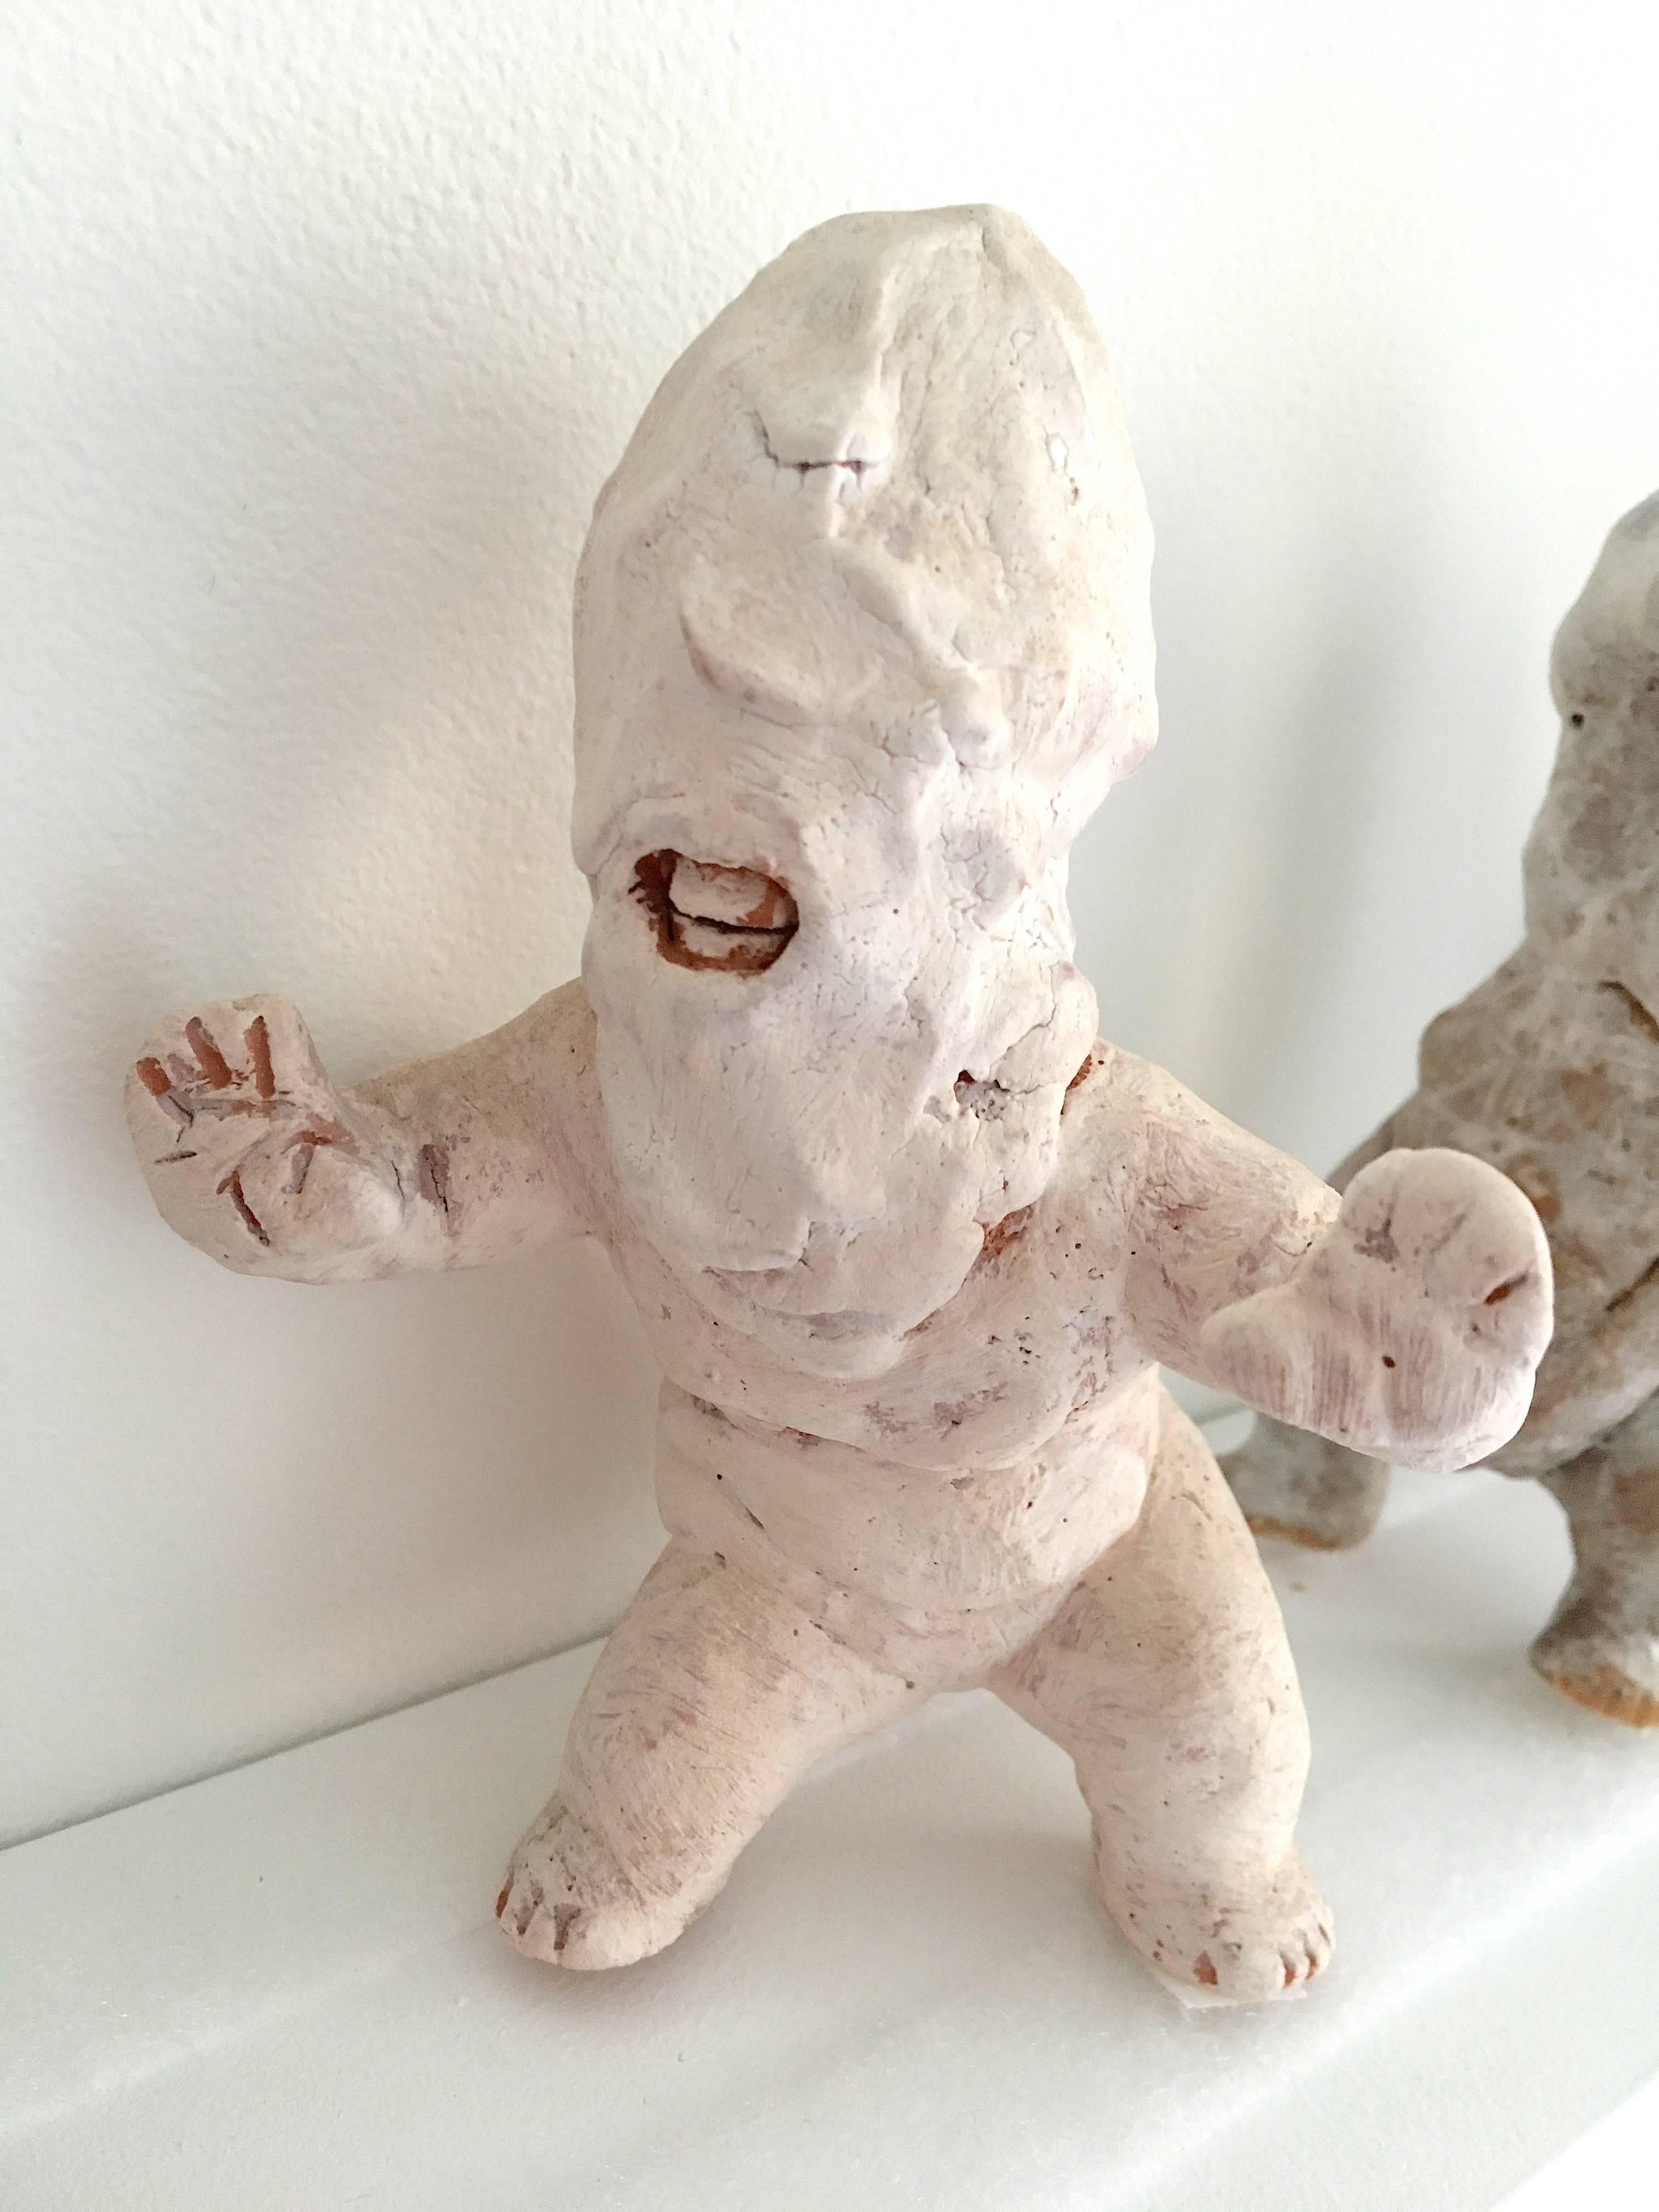 Kenjiro Kitade Figurative Sculpture - Enfant Terrible